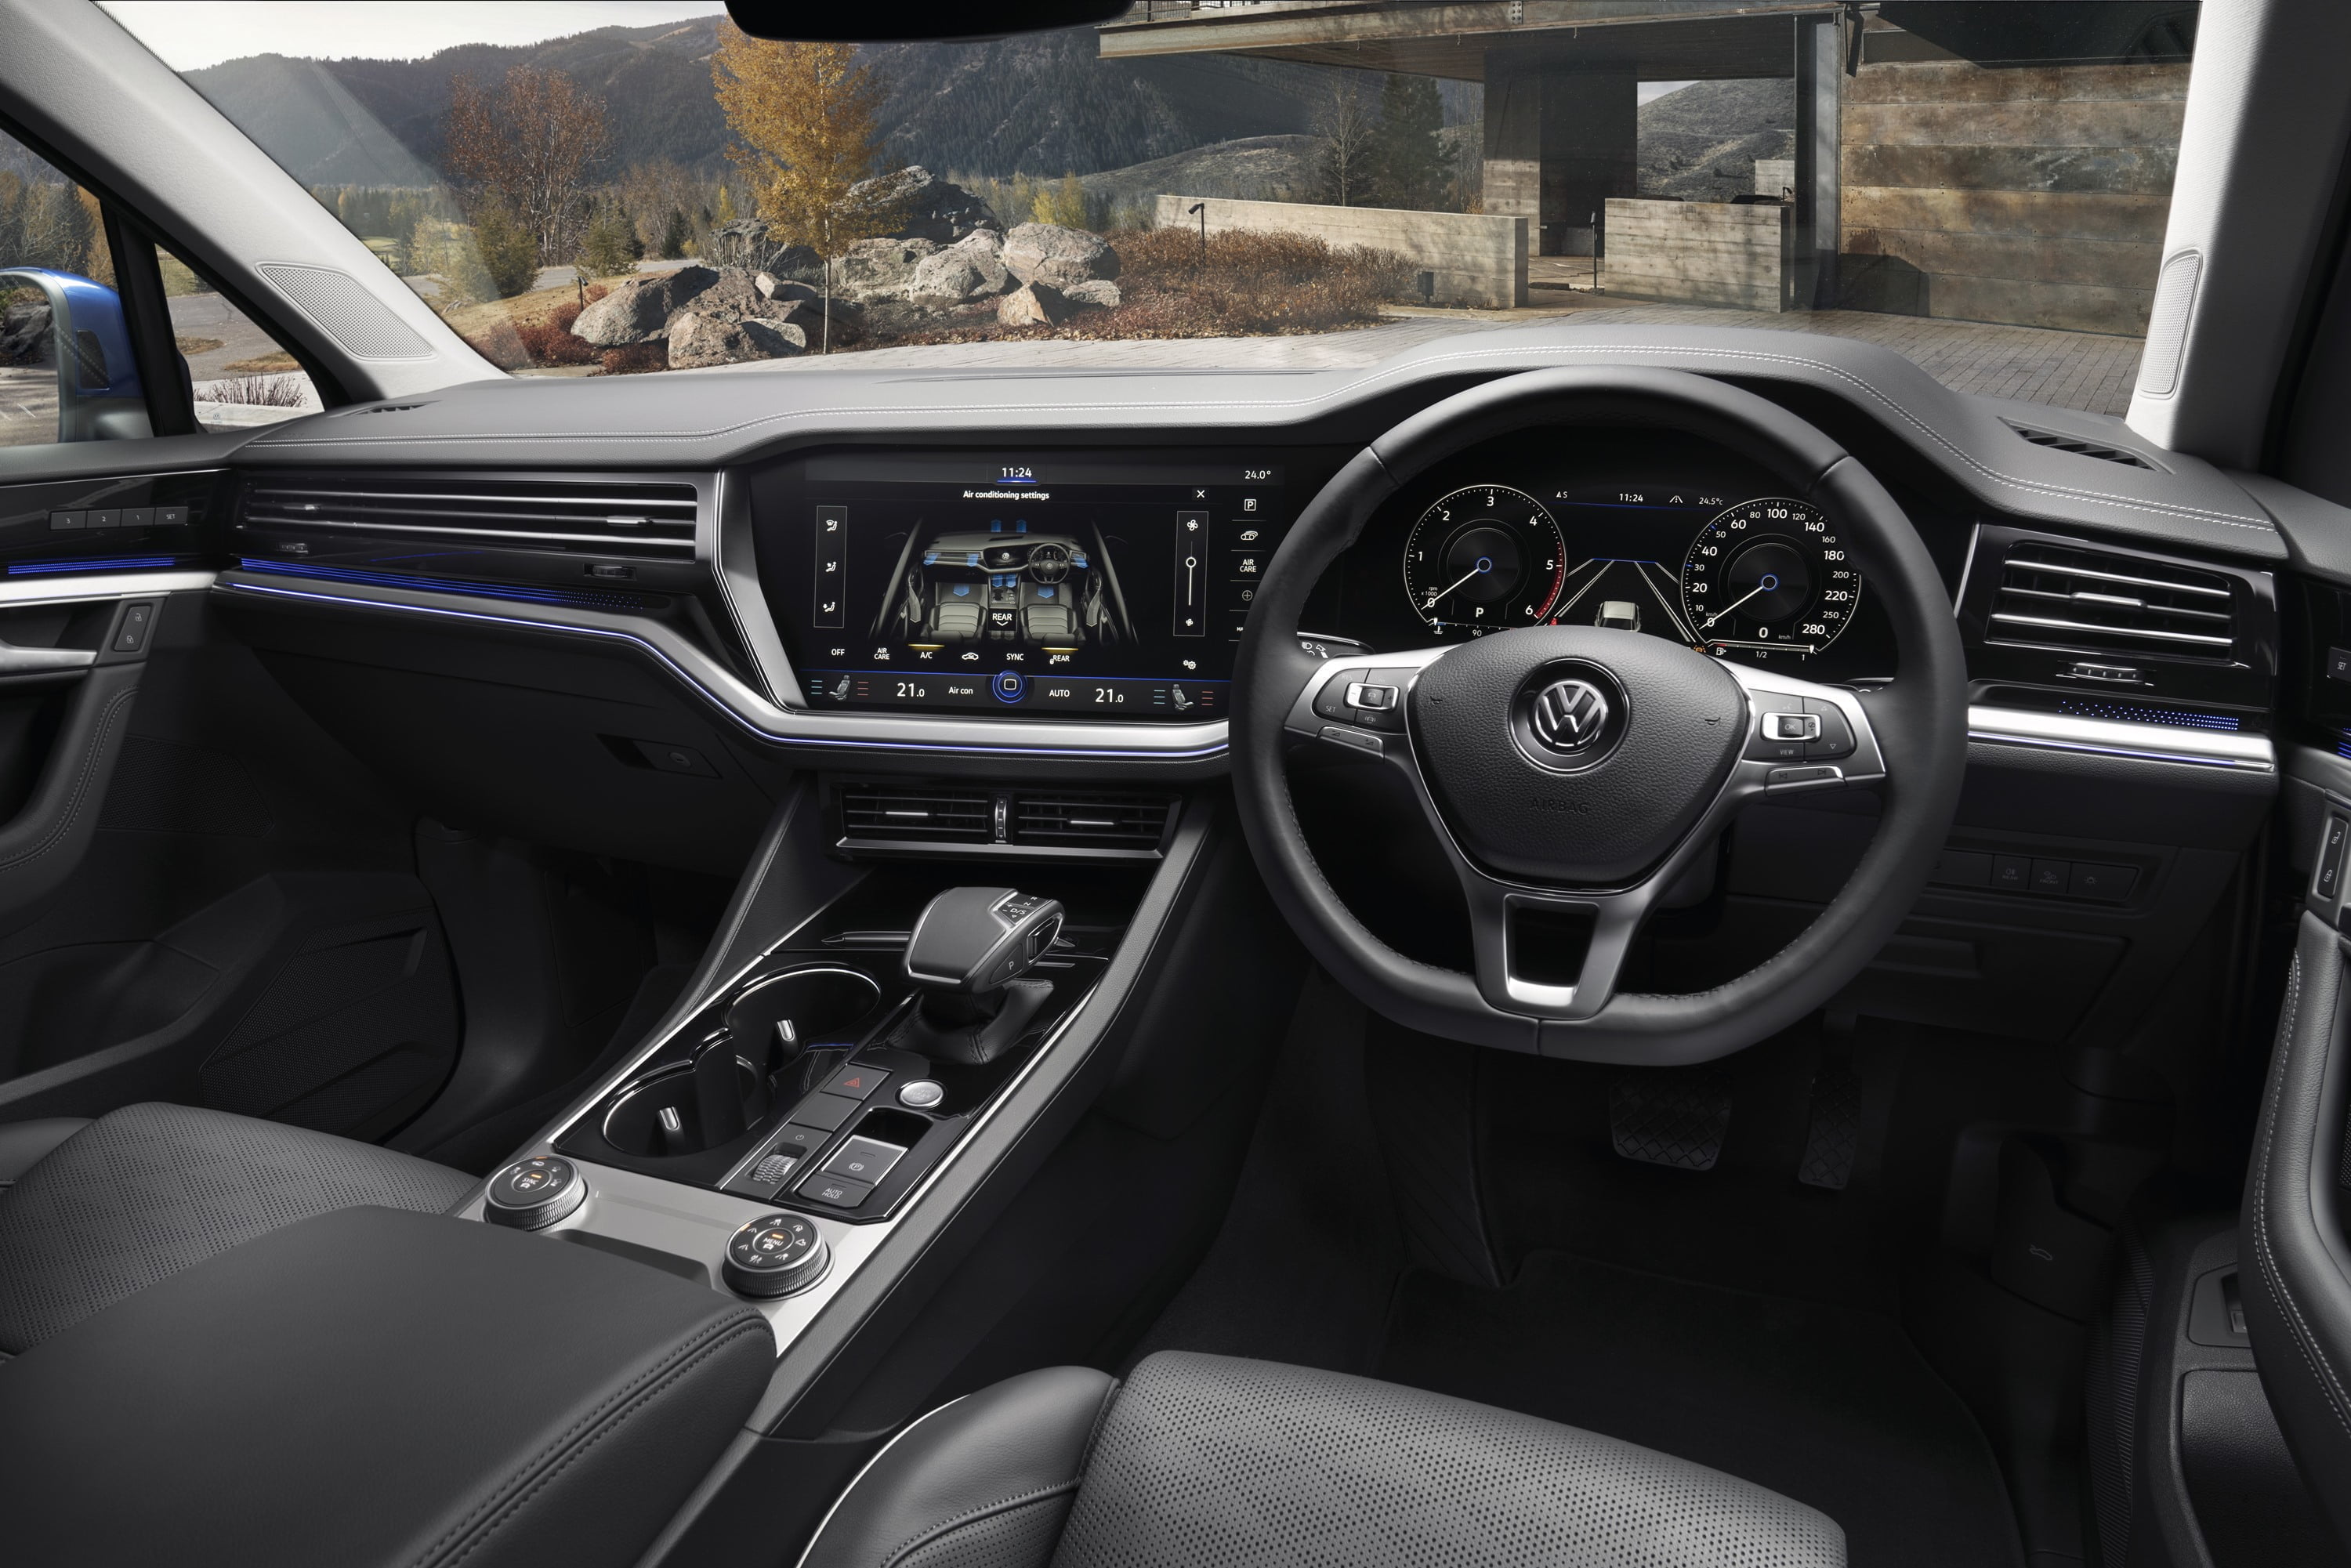 2019 VW Touareg Launch Edition 19 interior 2